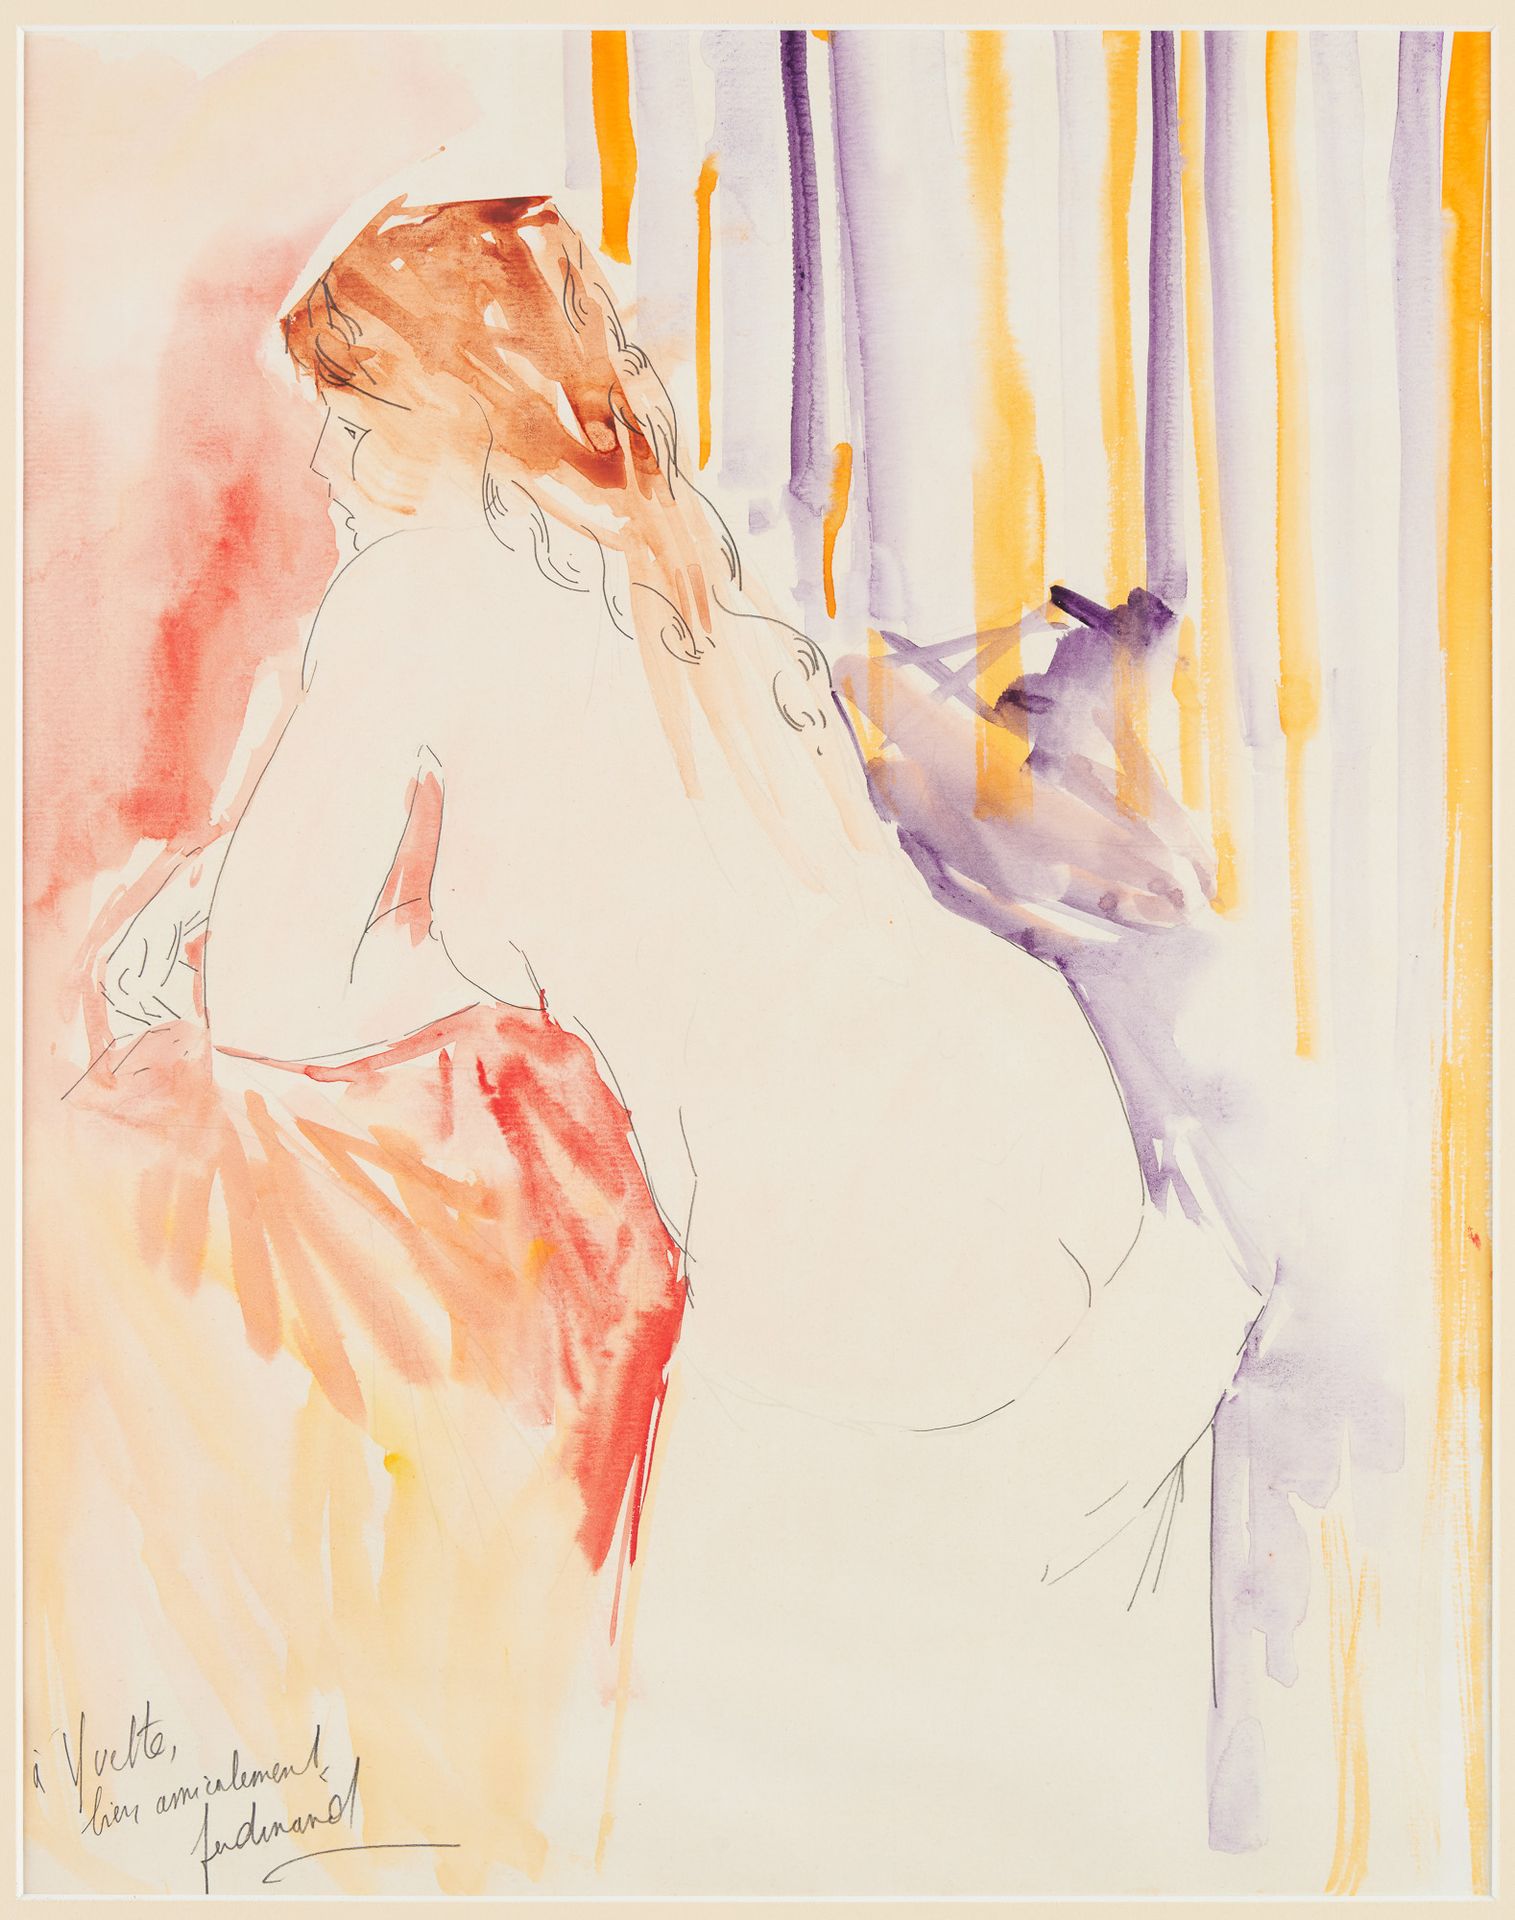 Ferdinand PIRE École belge (1943) 纸上水彩画：从后面看年轻的裸体女孩。

签名：费迪南，献给 "伊薇特，以爱之名"。

尺寸：&hellip;